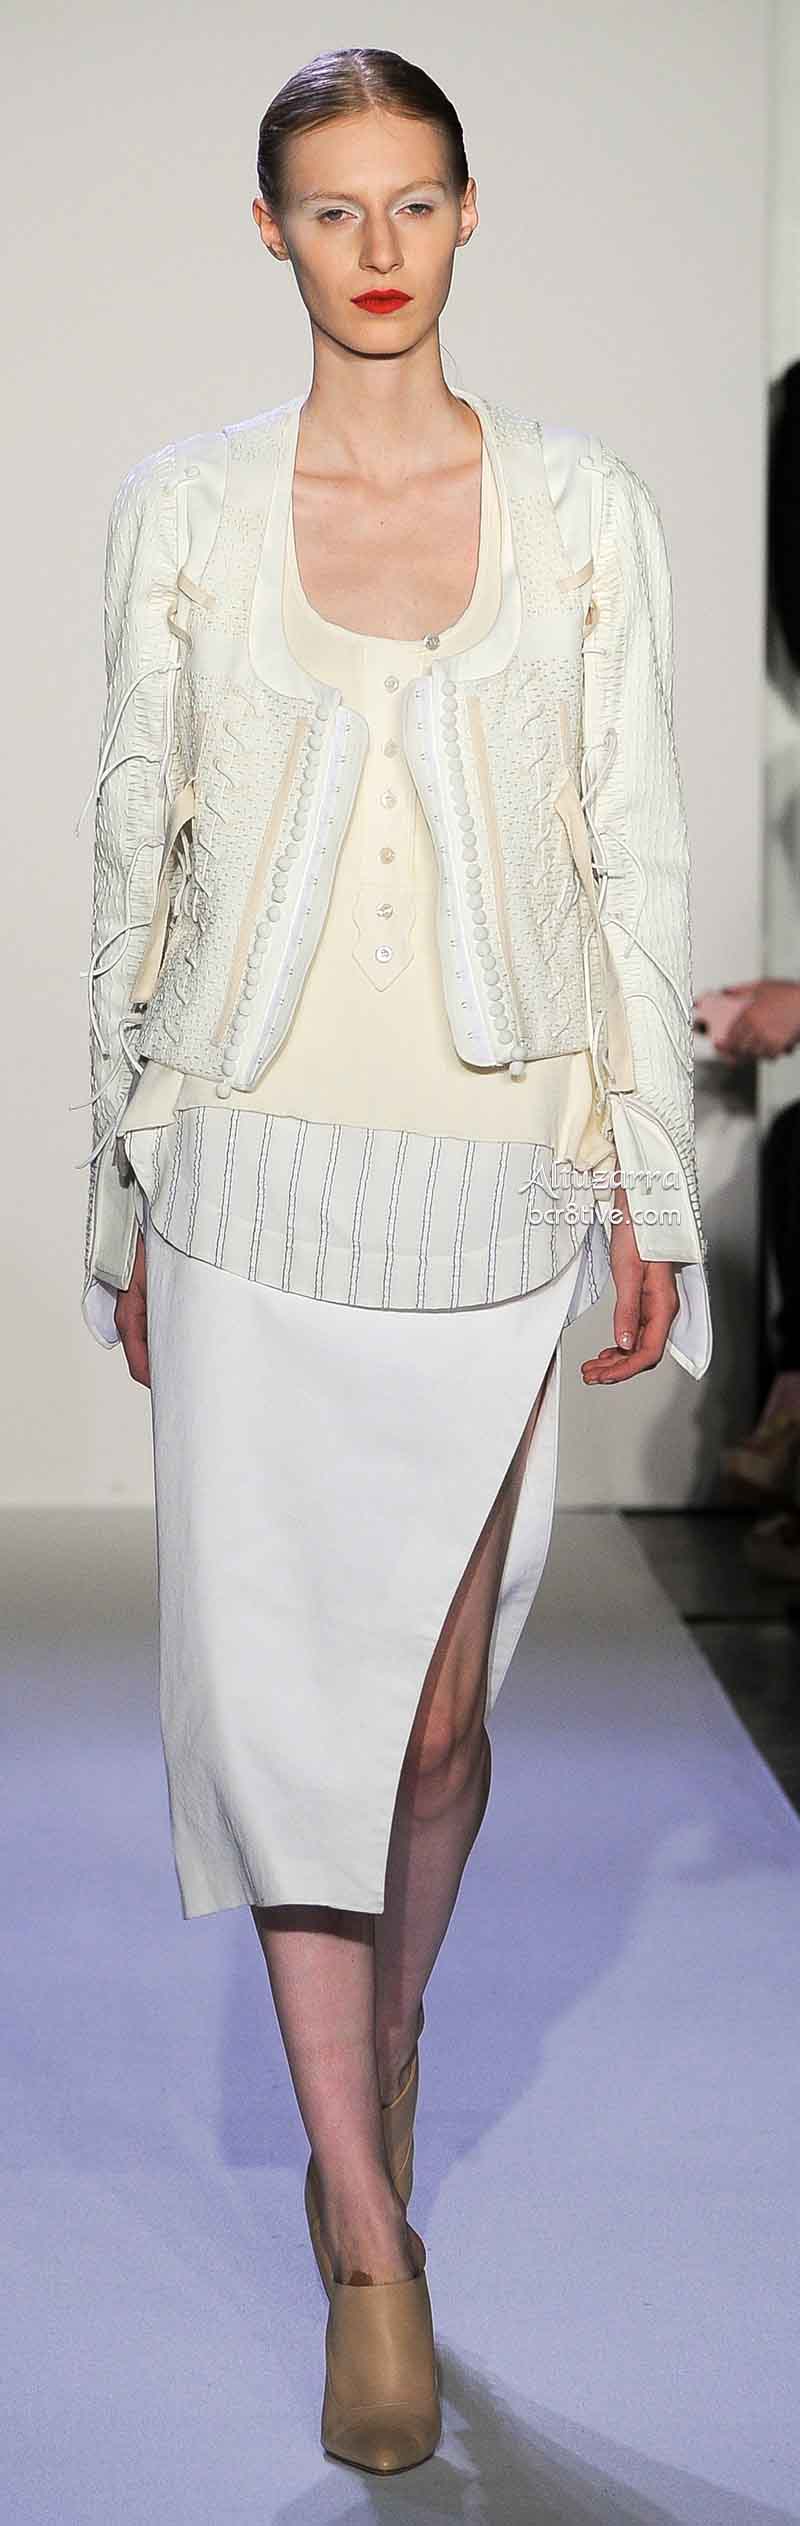 Altuzarra Neutral Pencil Skirt - Layered Tops and Jacket